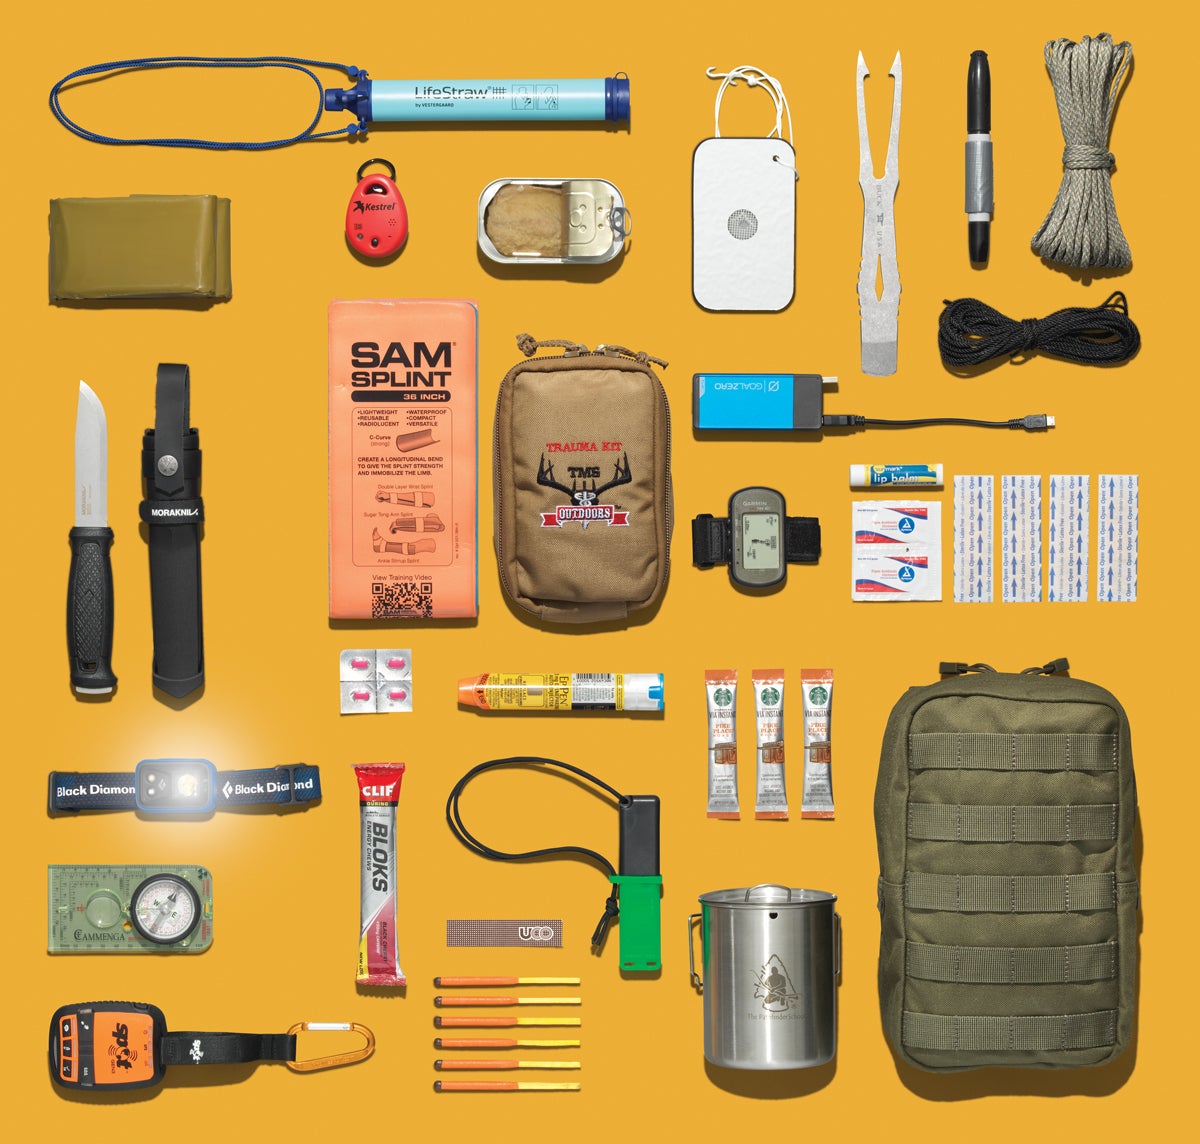 Hiking Gear Essentials For Women Hunting Gear Best Emergency Survival Kit